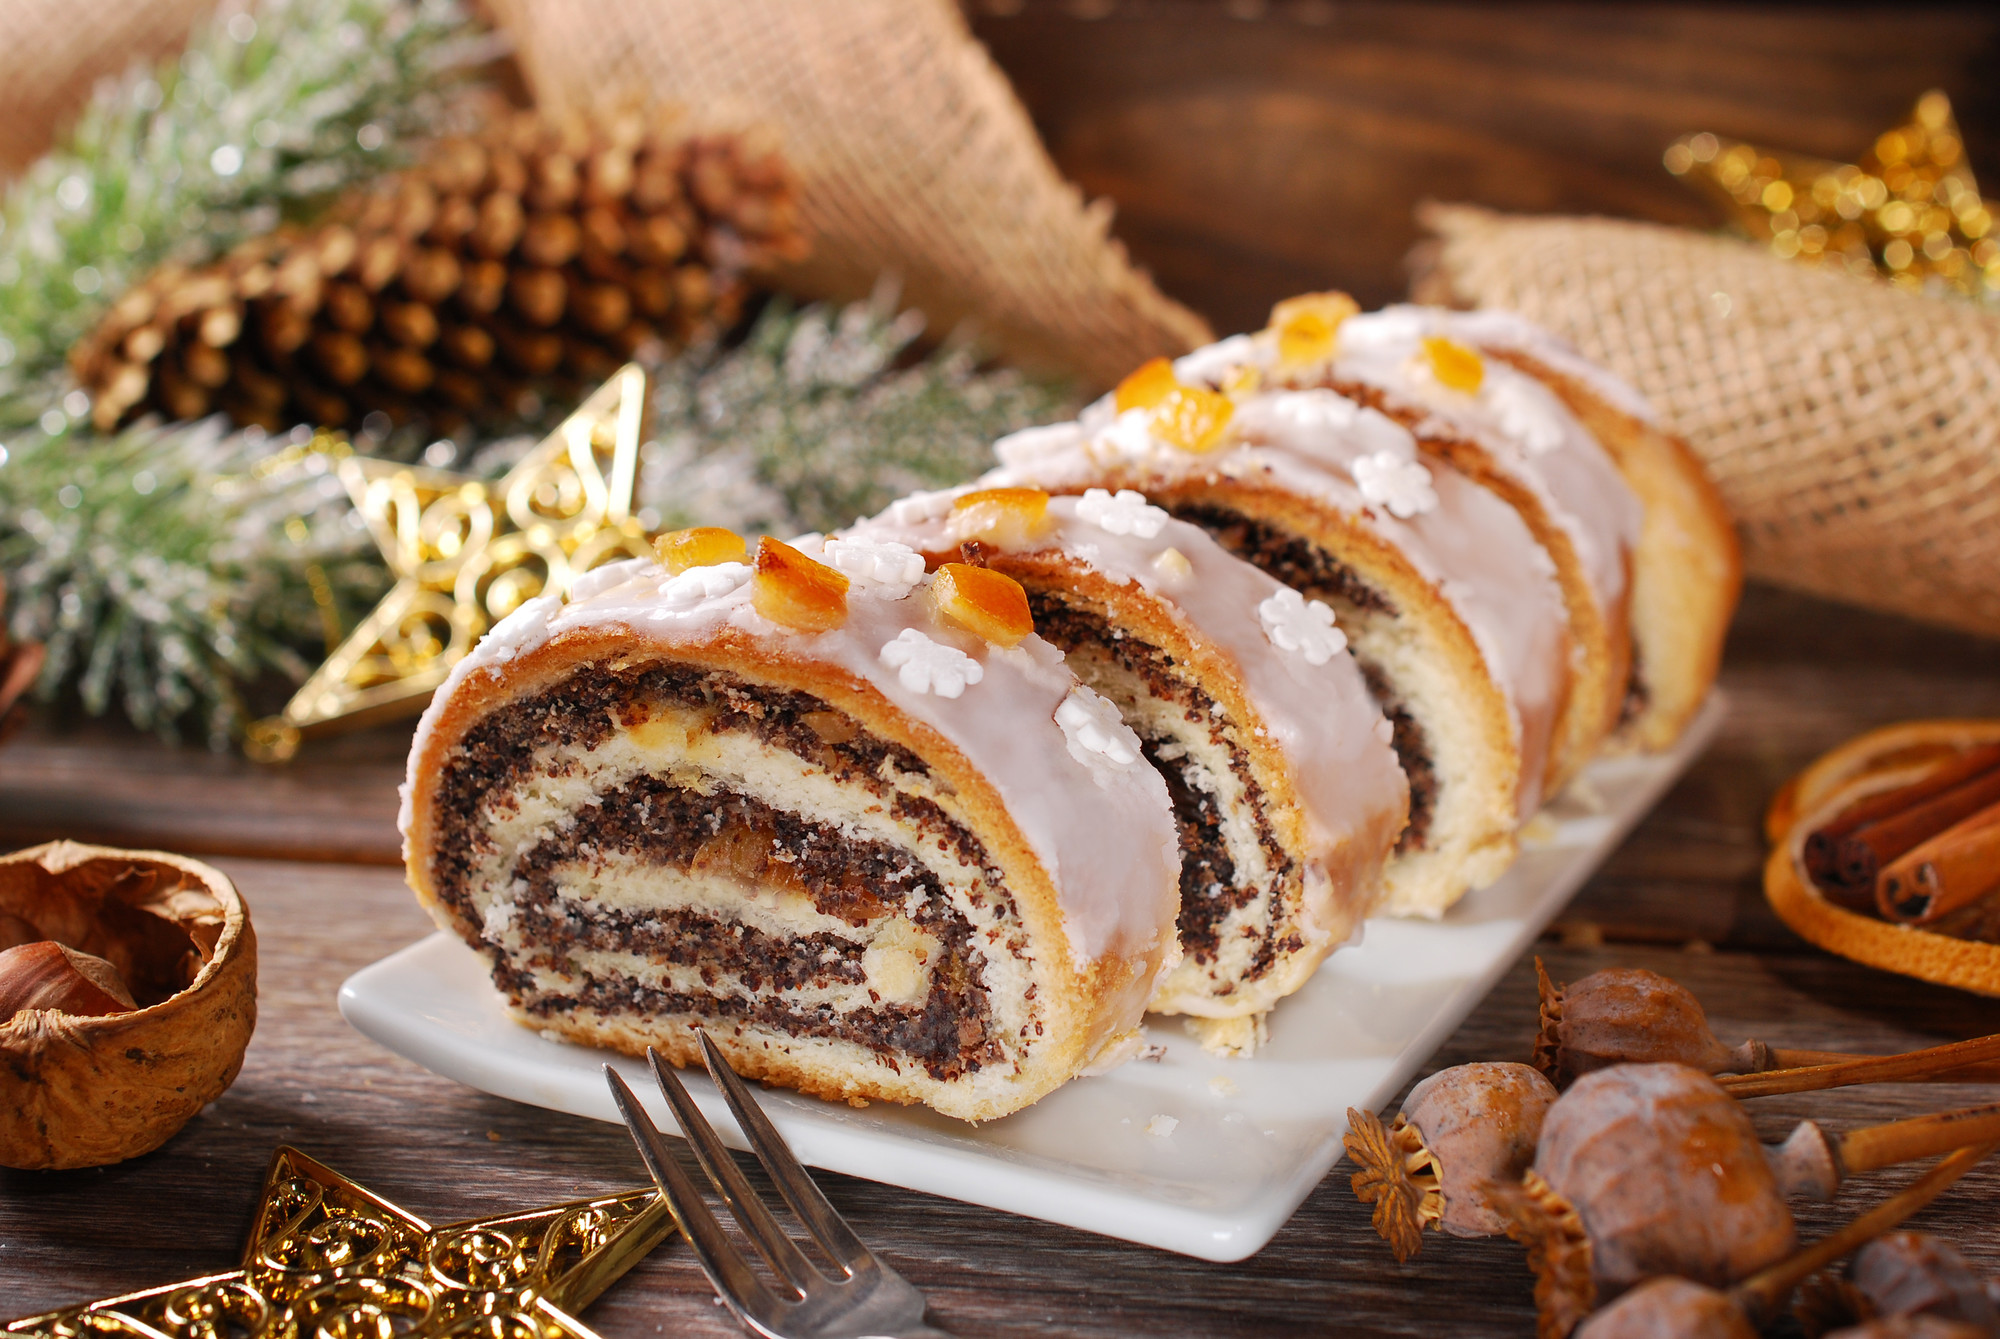 Polish Christmas Dessert Recipes - 18 Scrumptious Polish ...